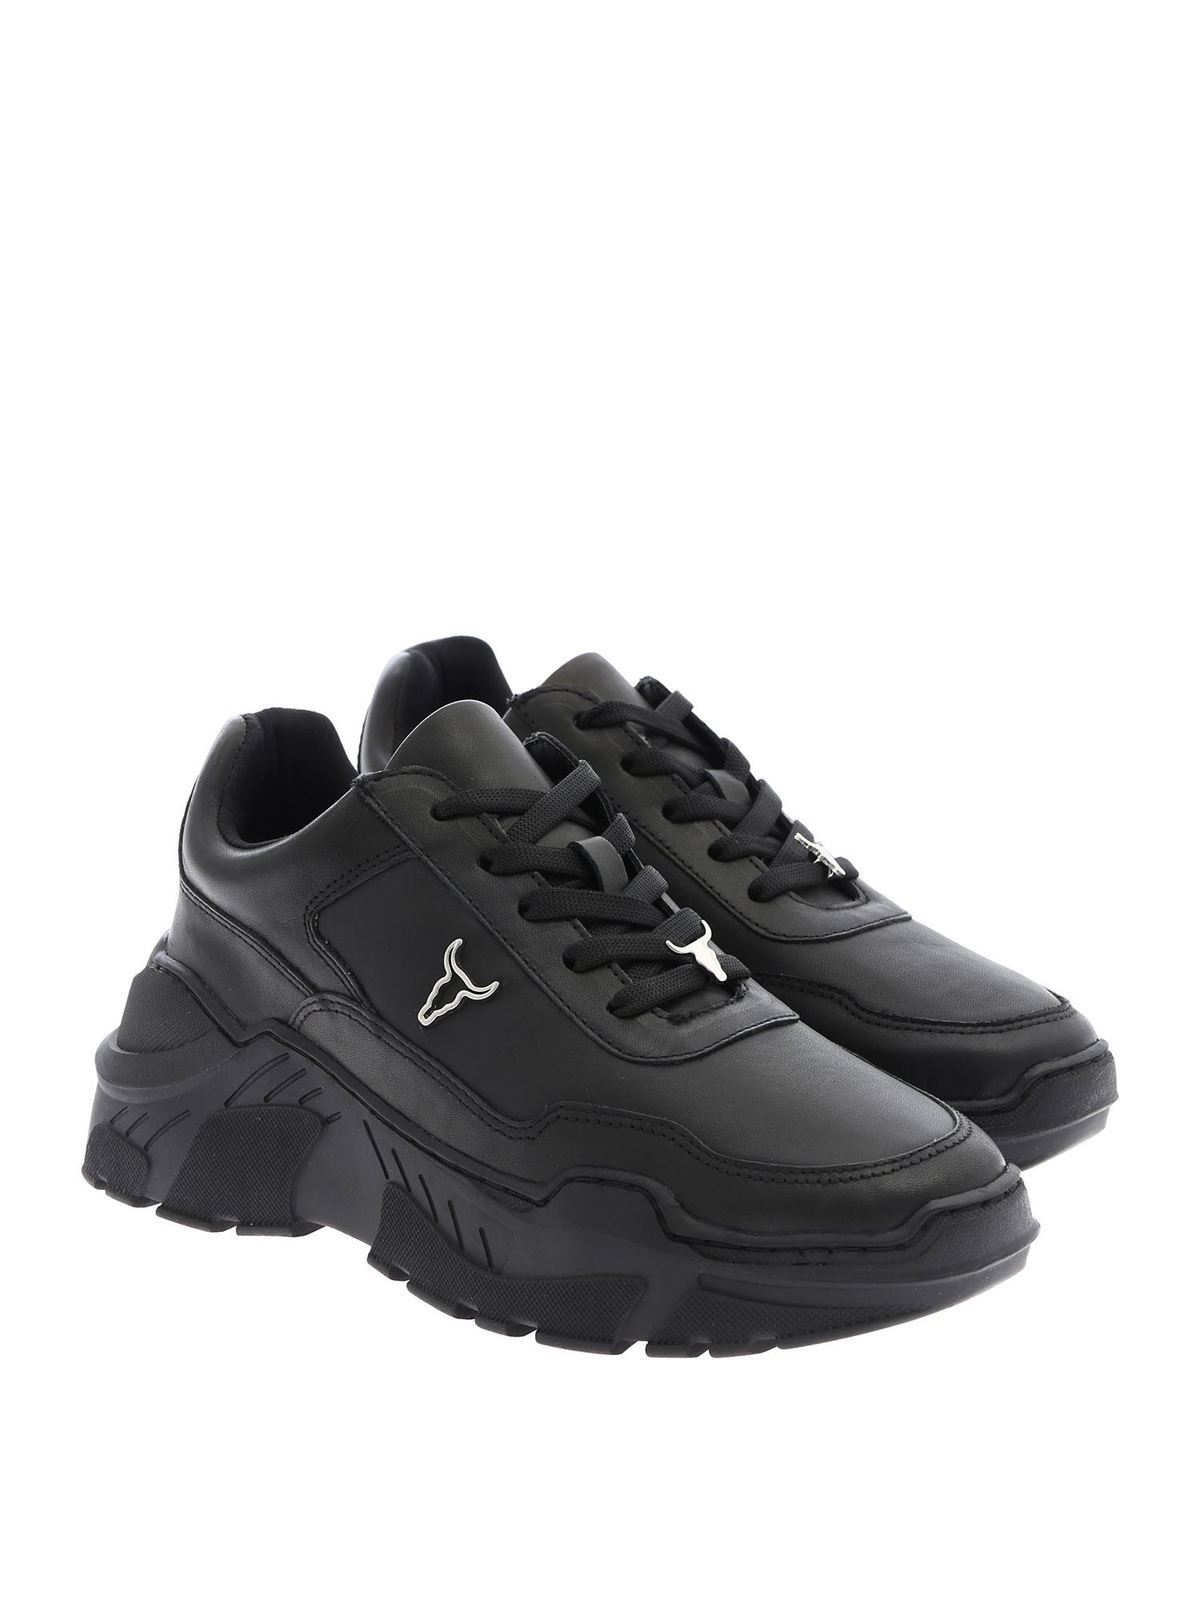 Windsor Smith - Black Carte sneakers 